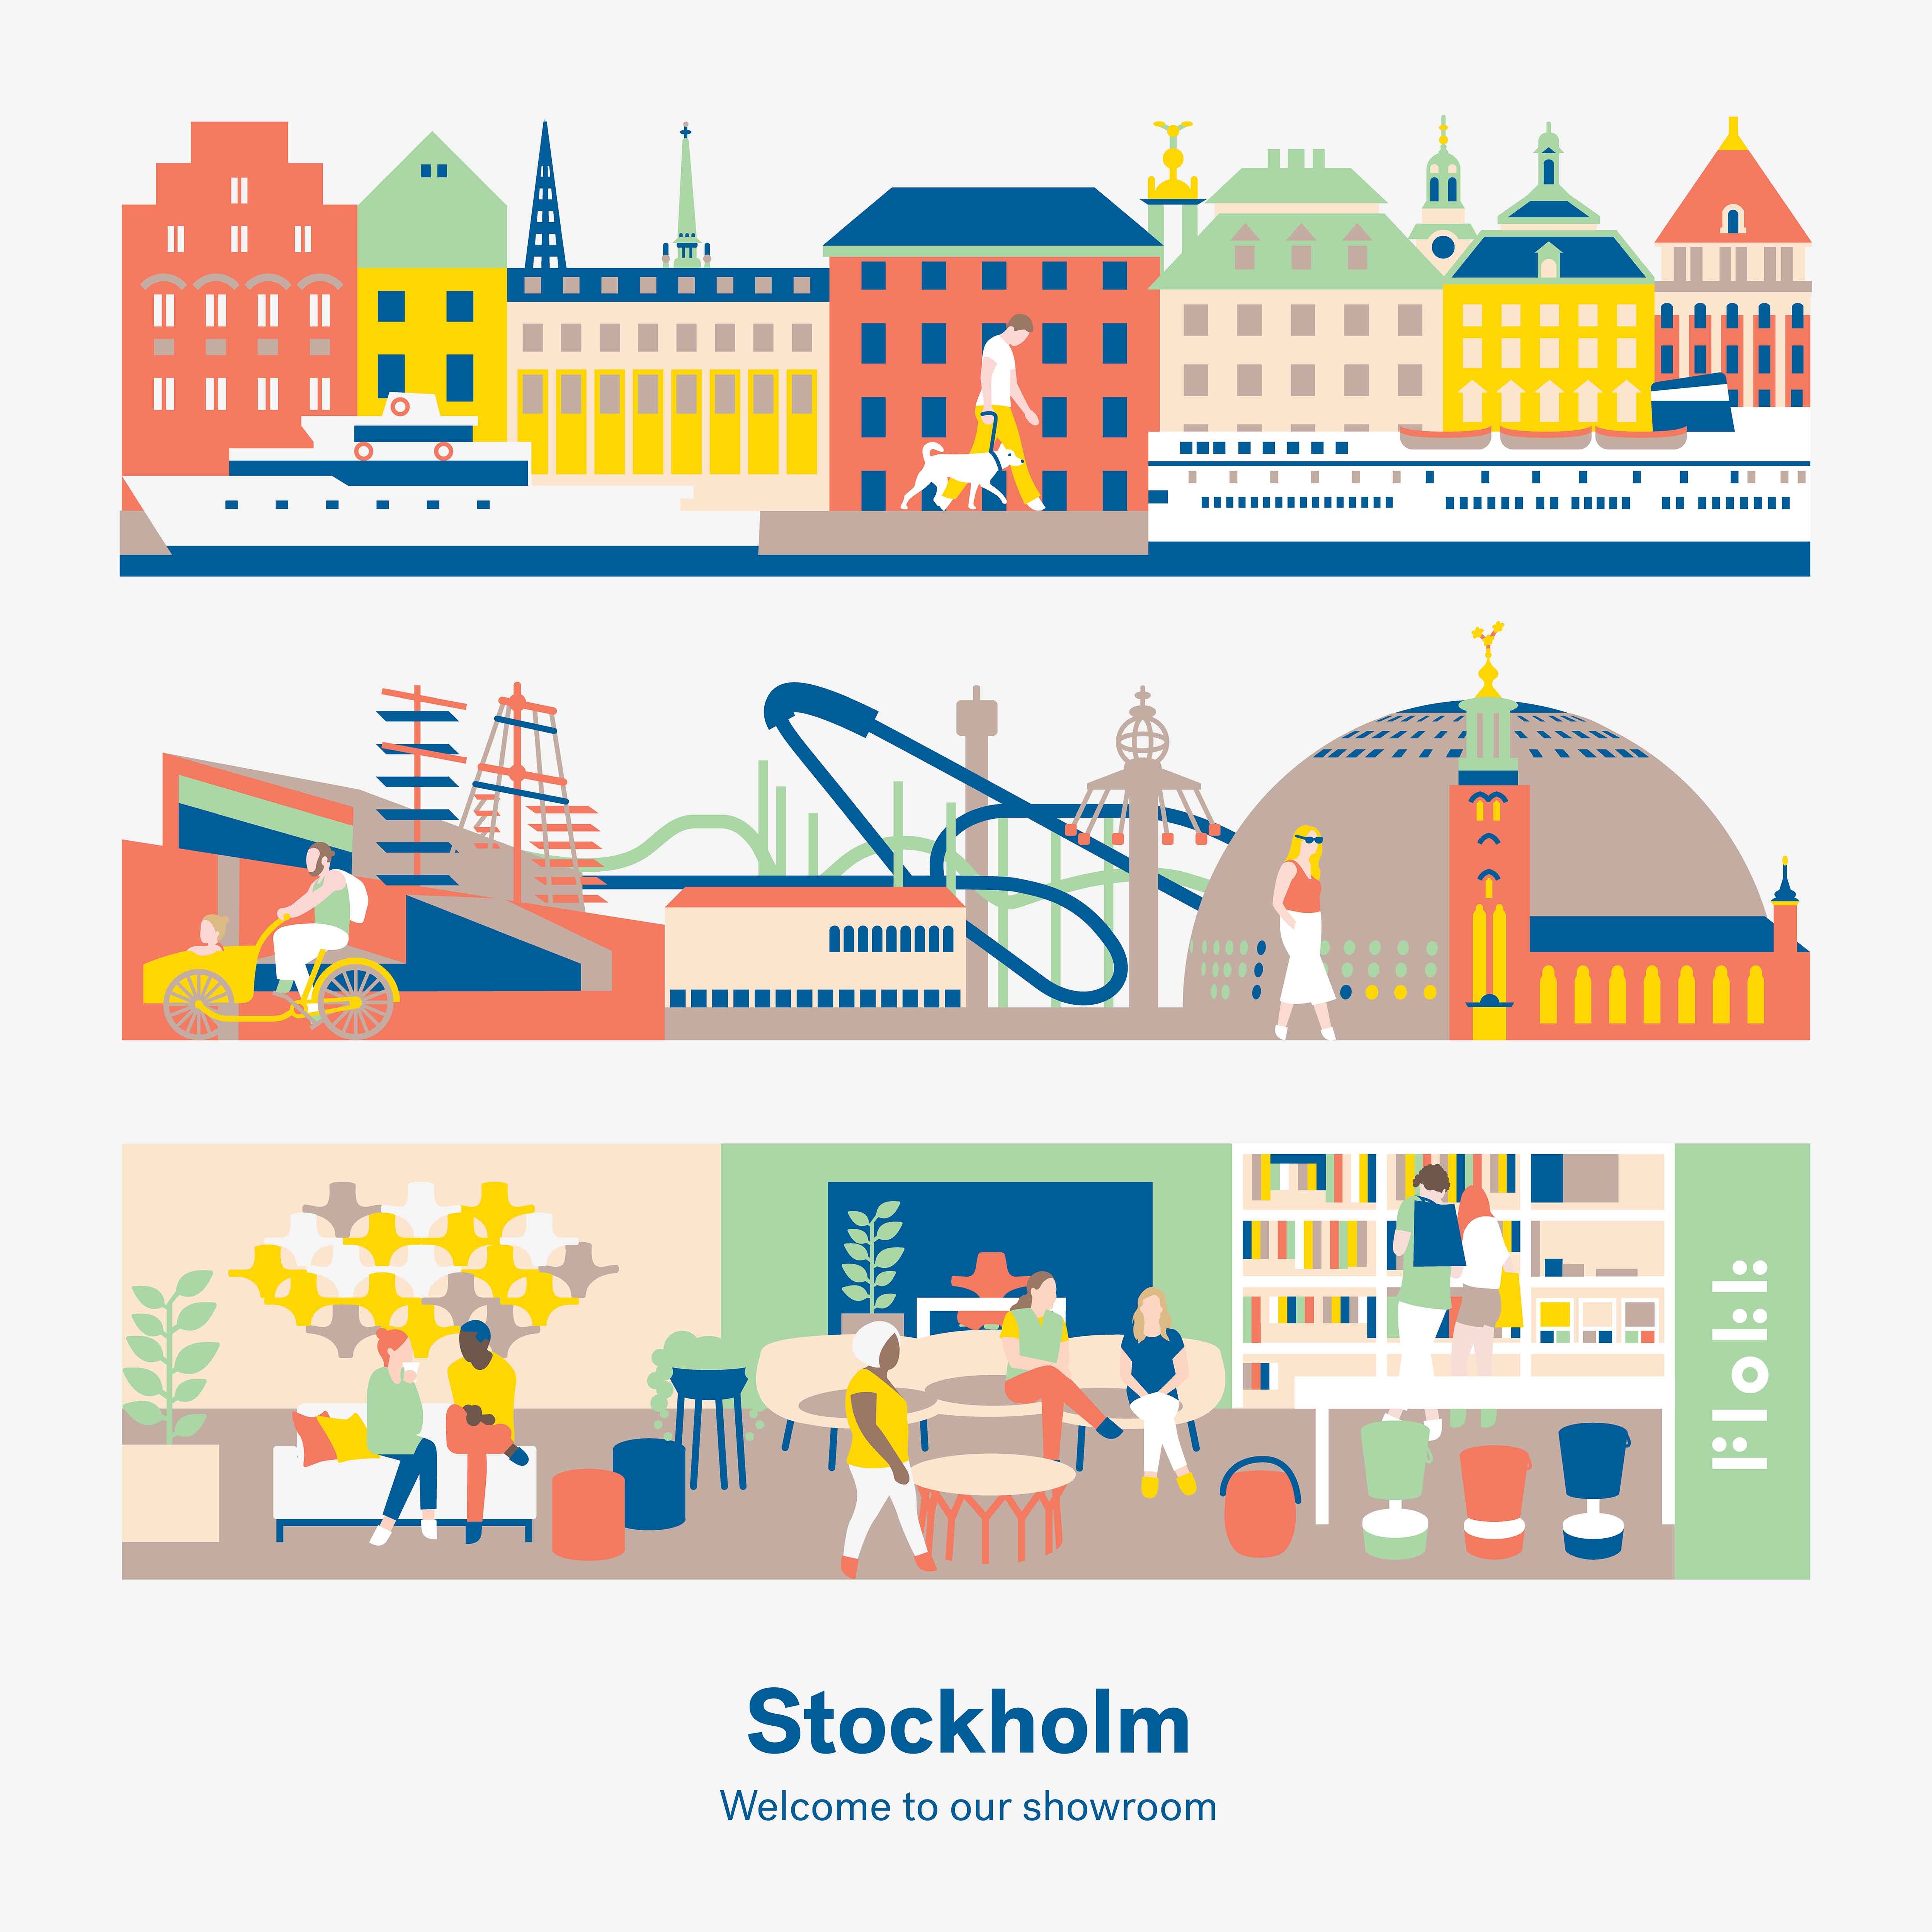 FLOKK_Stockholm_small